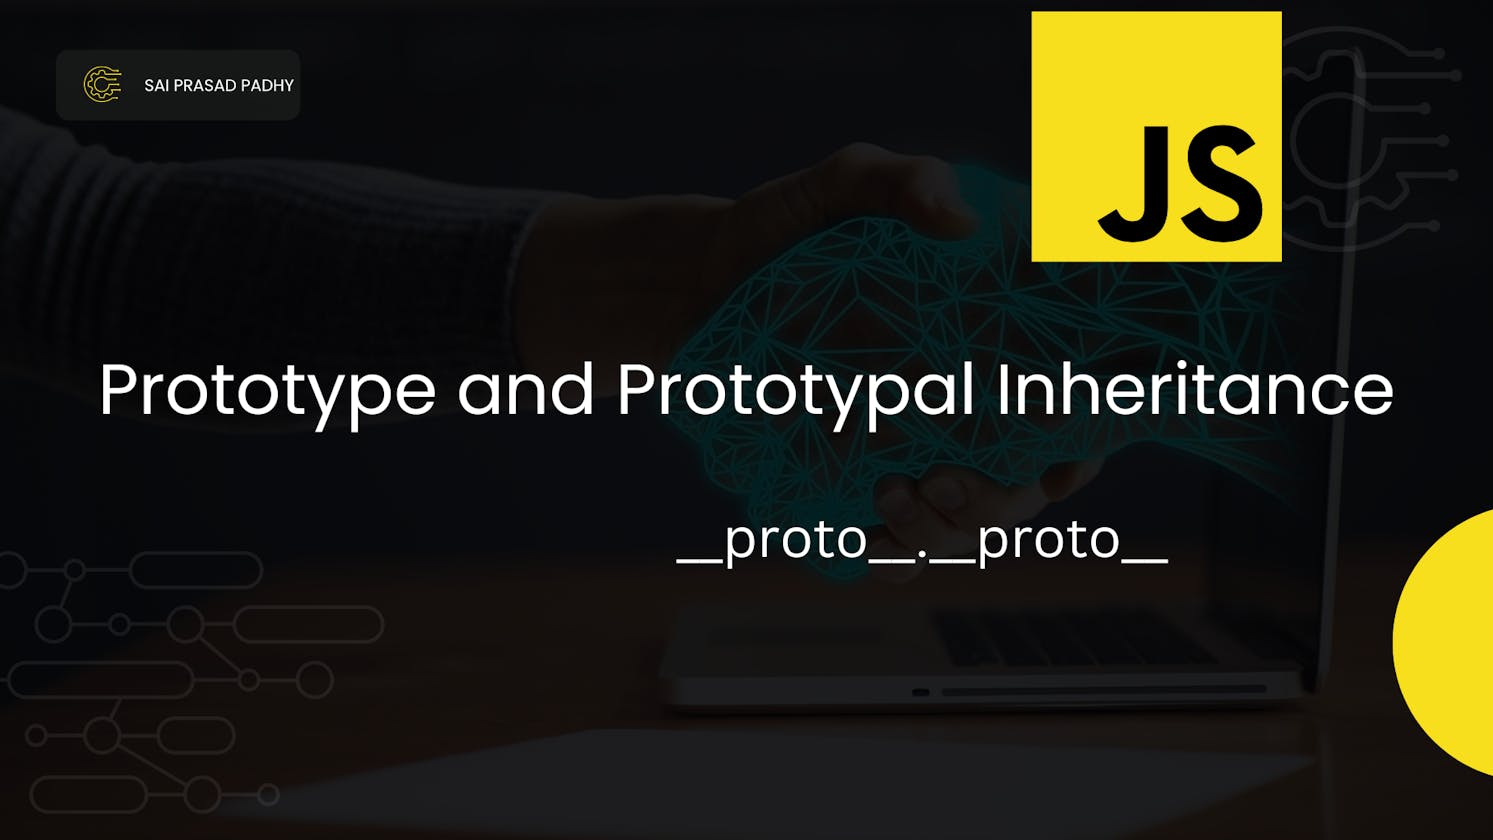 Prototype and Prototypal Inheritance in JavaScript